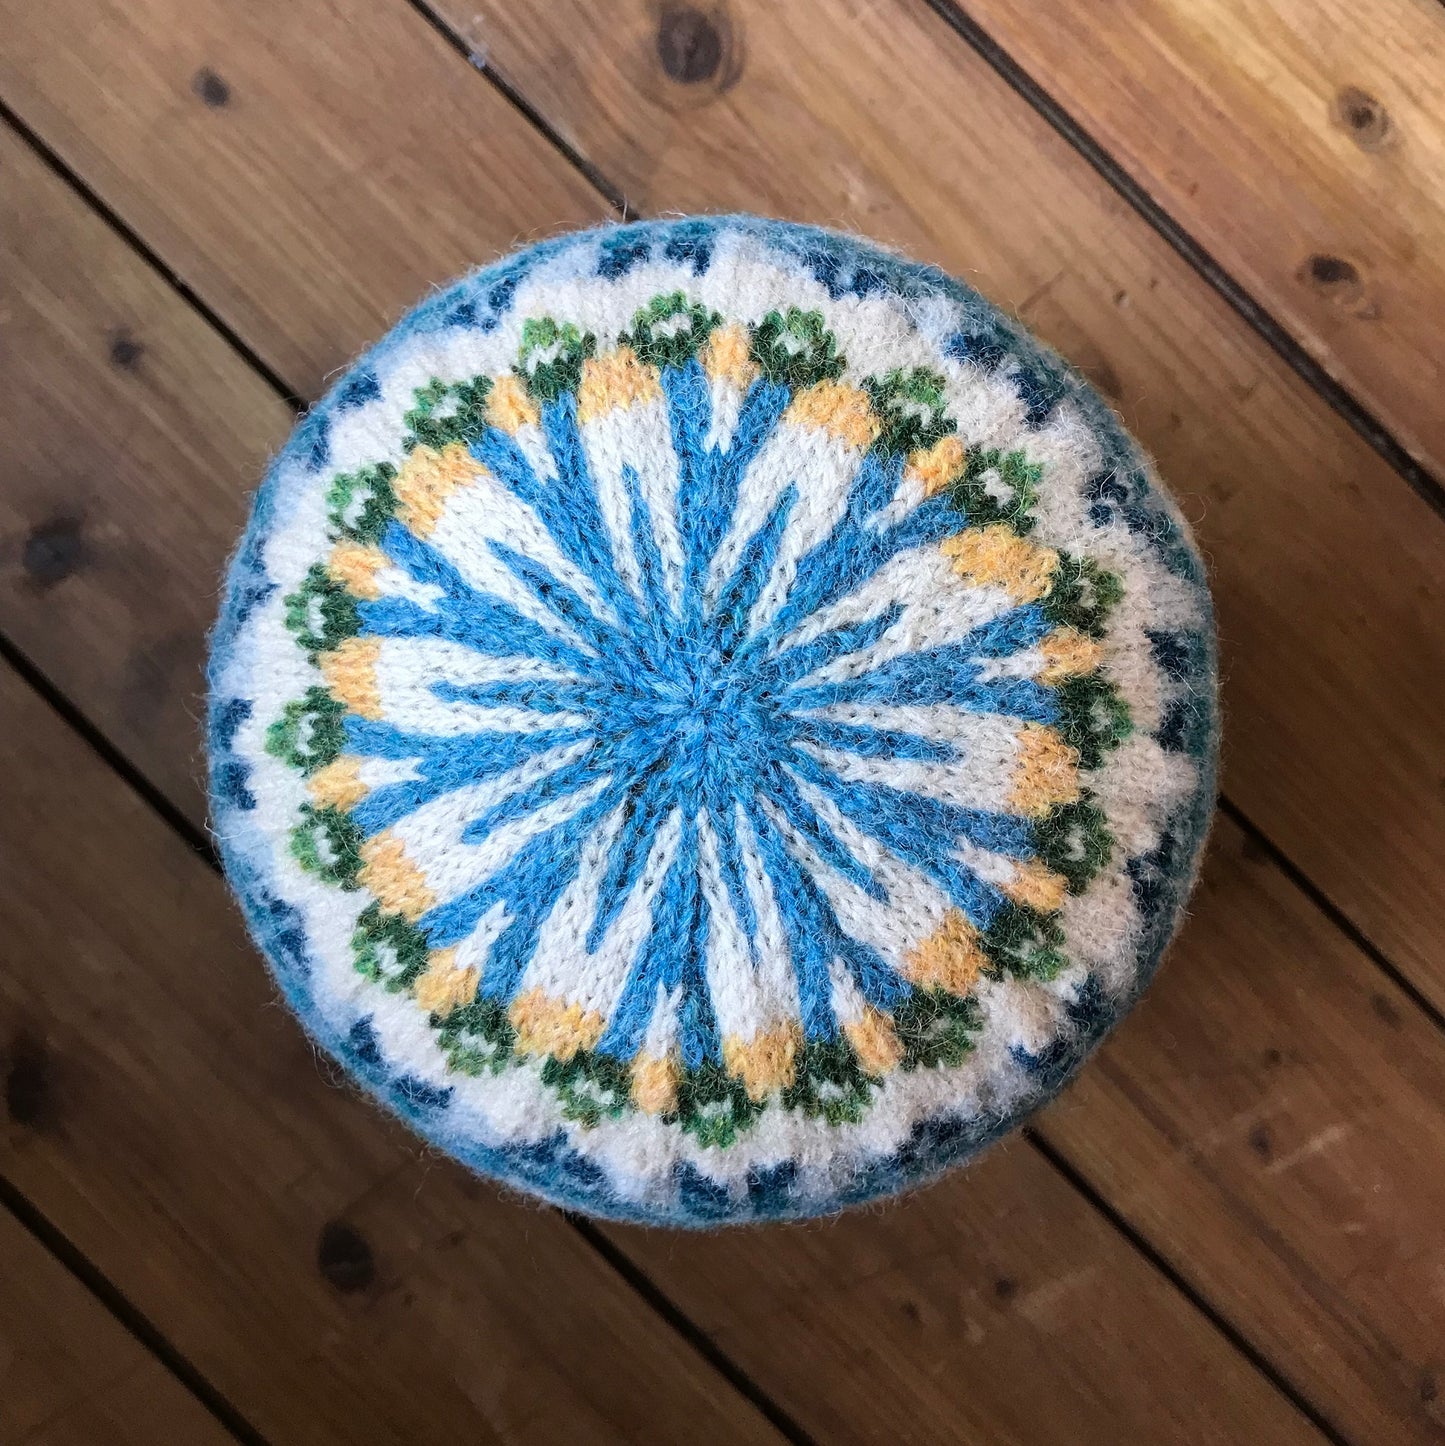 Knitting Jenny Pattern 18: Fair Isle Inspired Fisherman’s Kep and Design Workbook